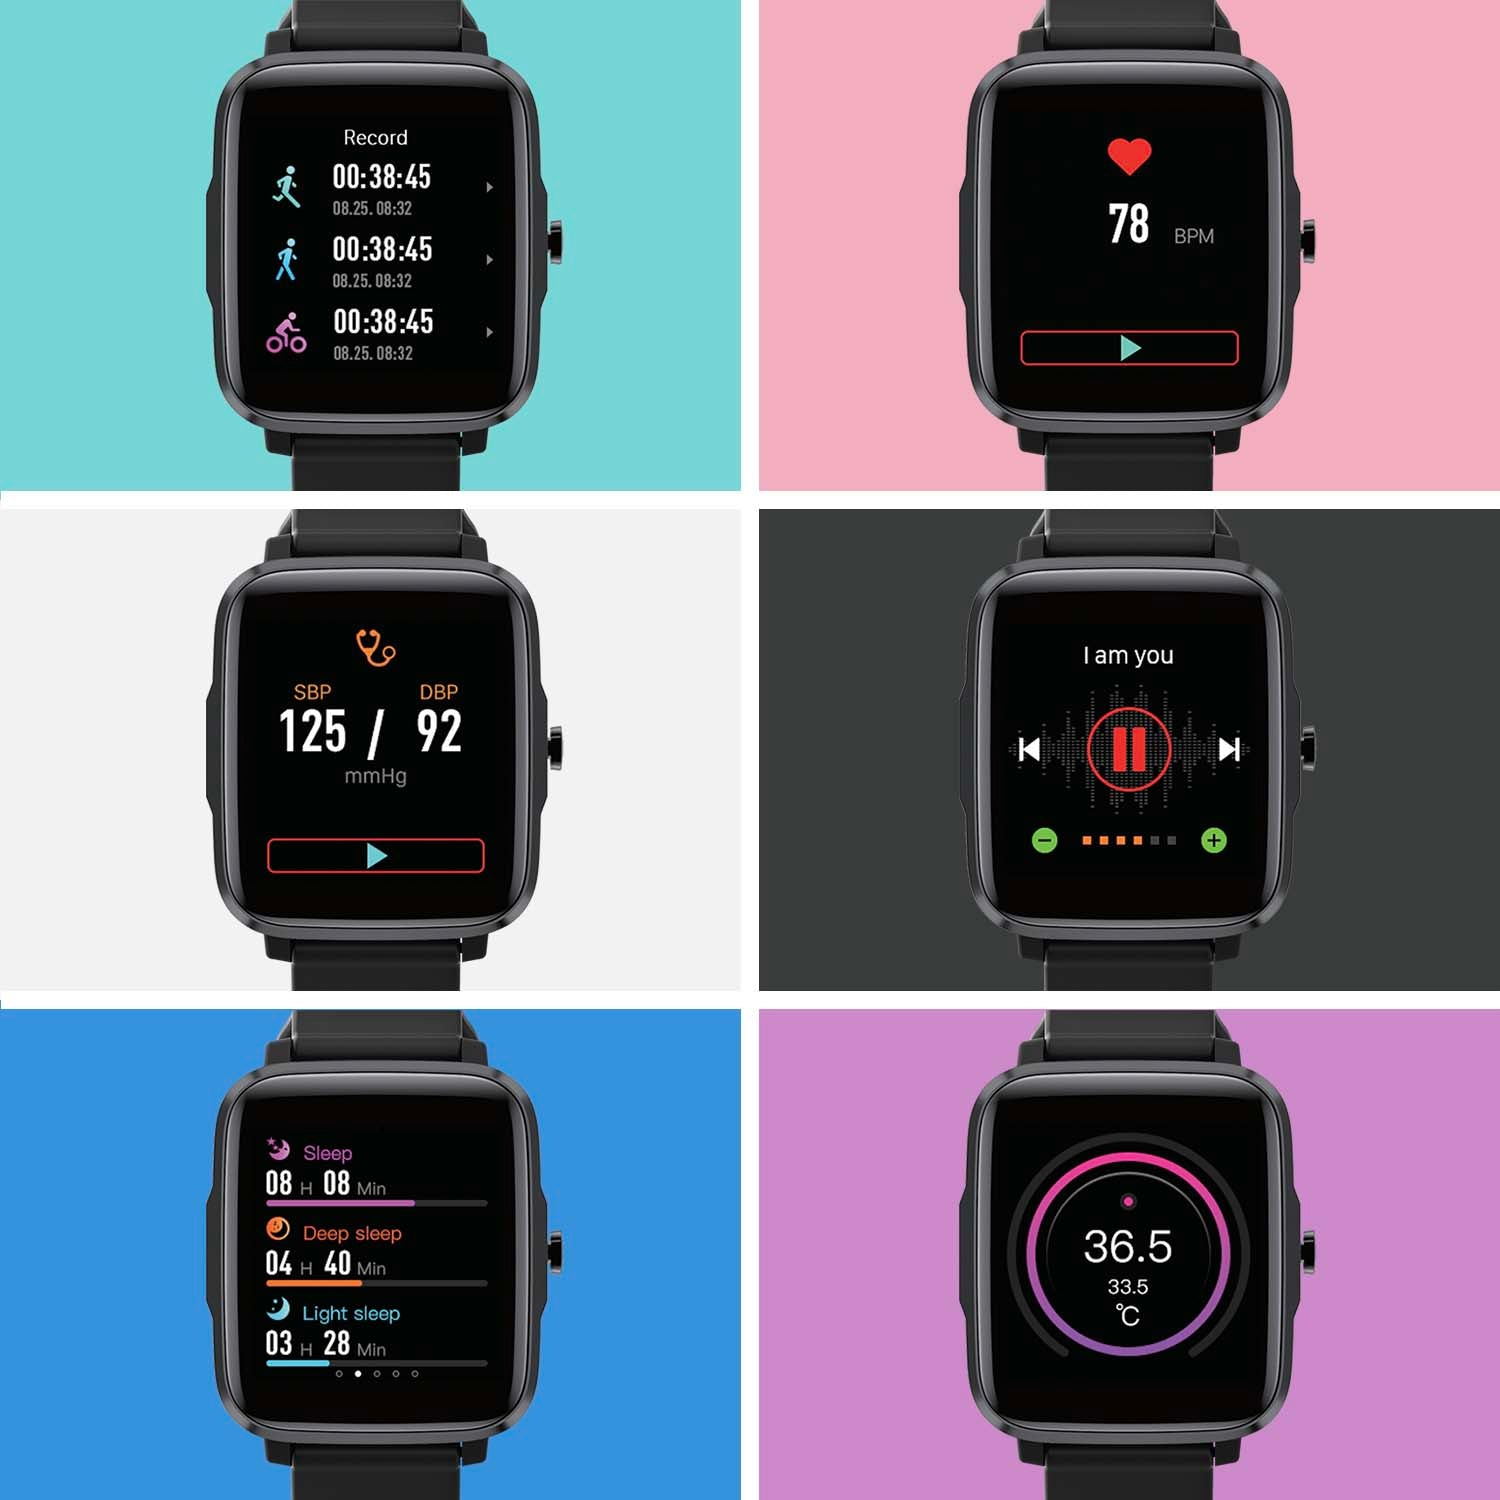 F2 Smart watch screens